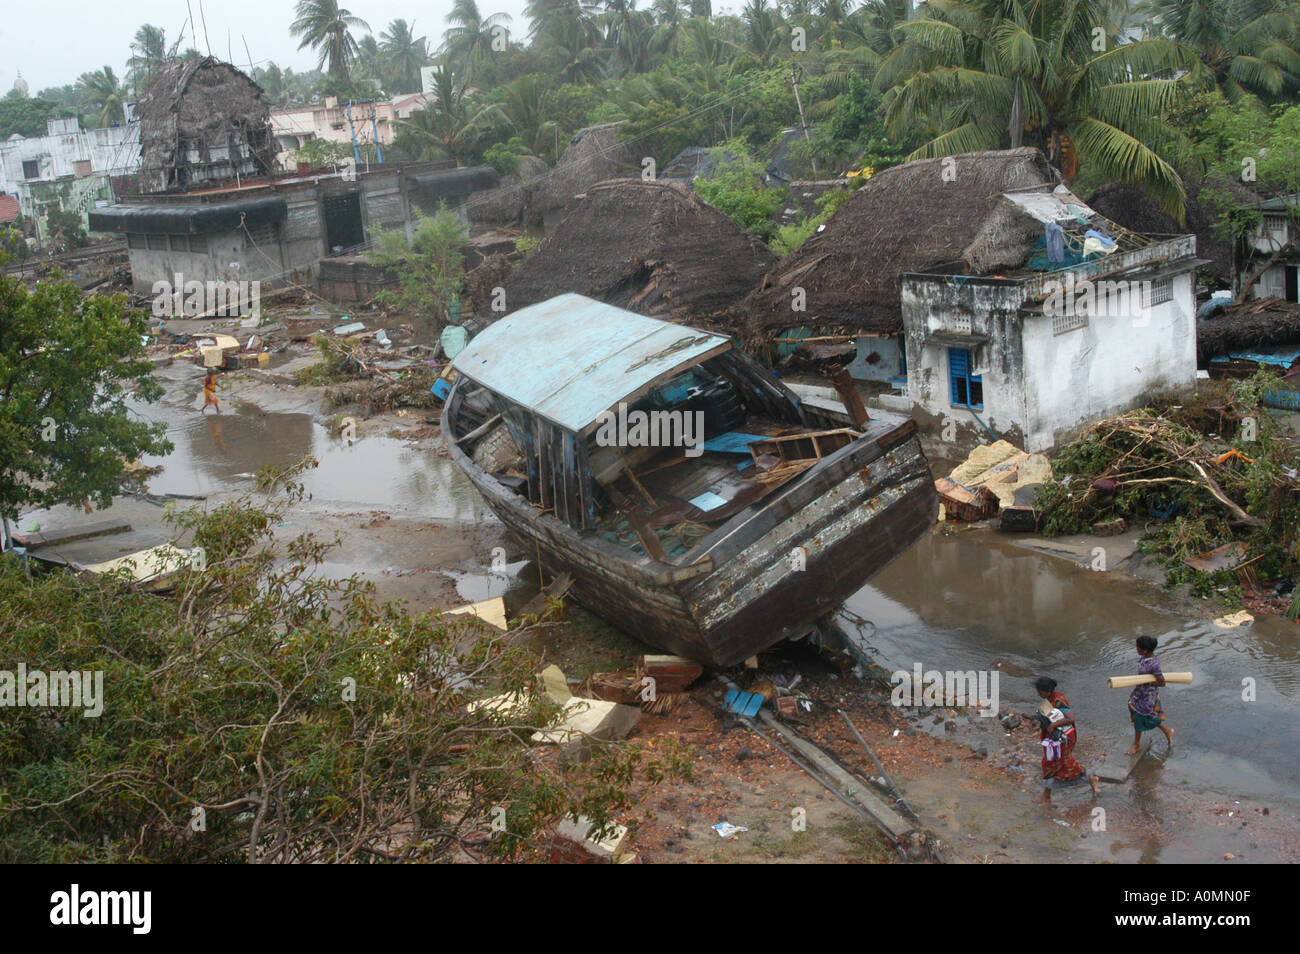 Boat on land, damage by natural disaster Tsunami earthquake on sea floor, Nagapattinum, Velankanni, Tamilnadu, Indian Ocean, India, Asia, Asian Stock Photo